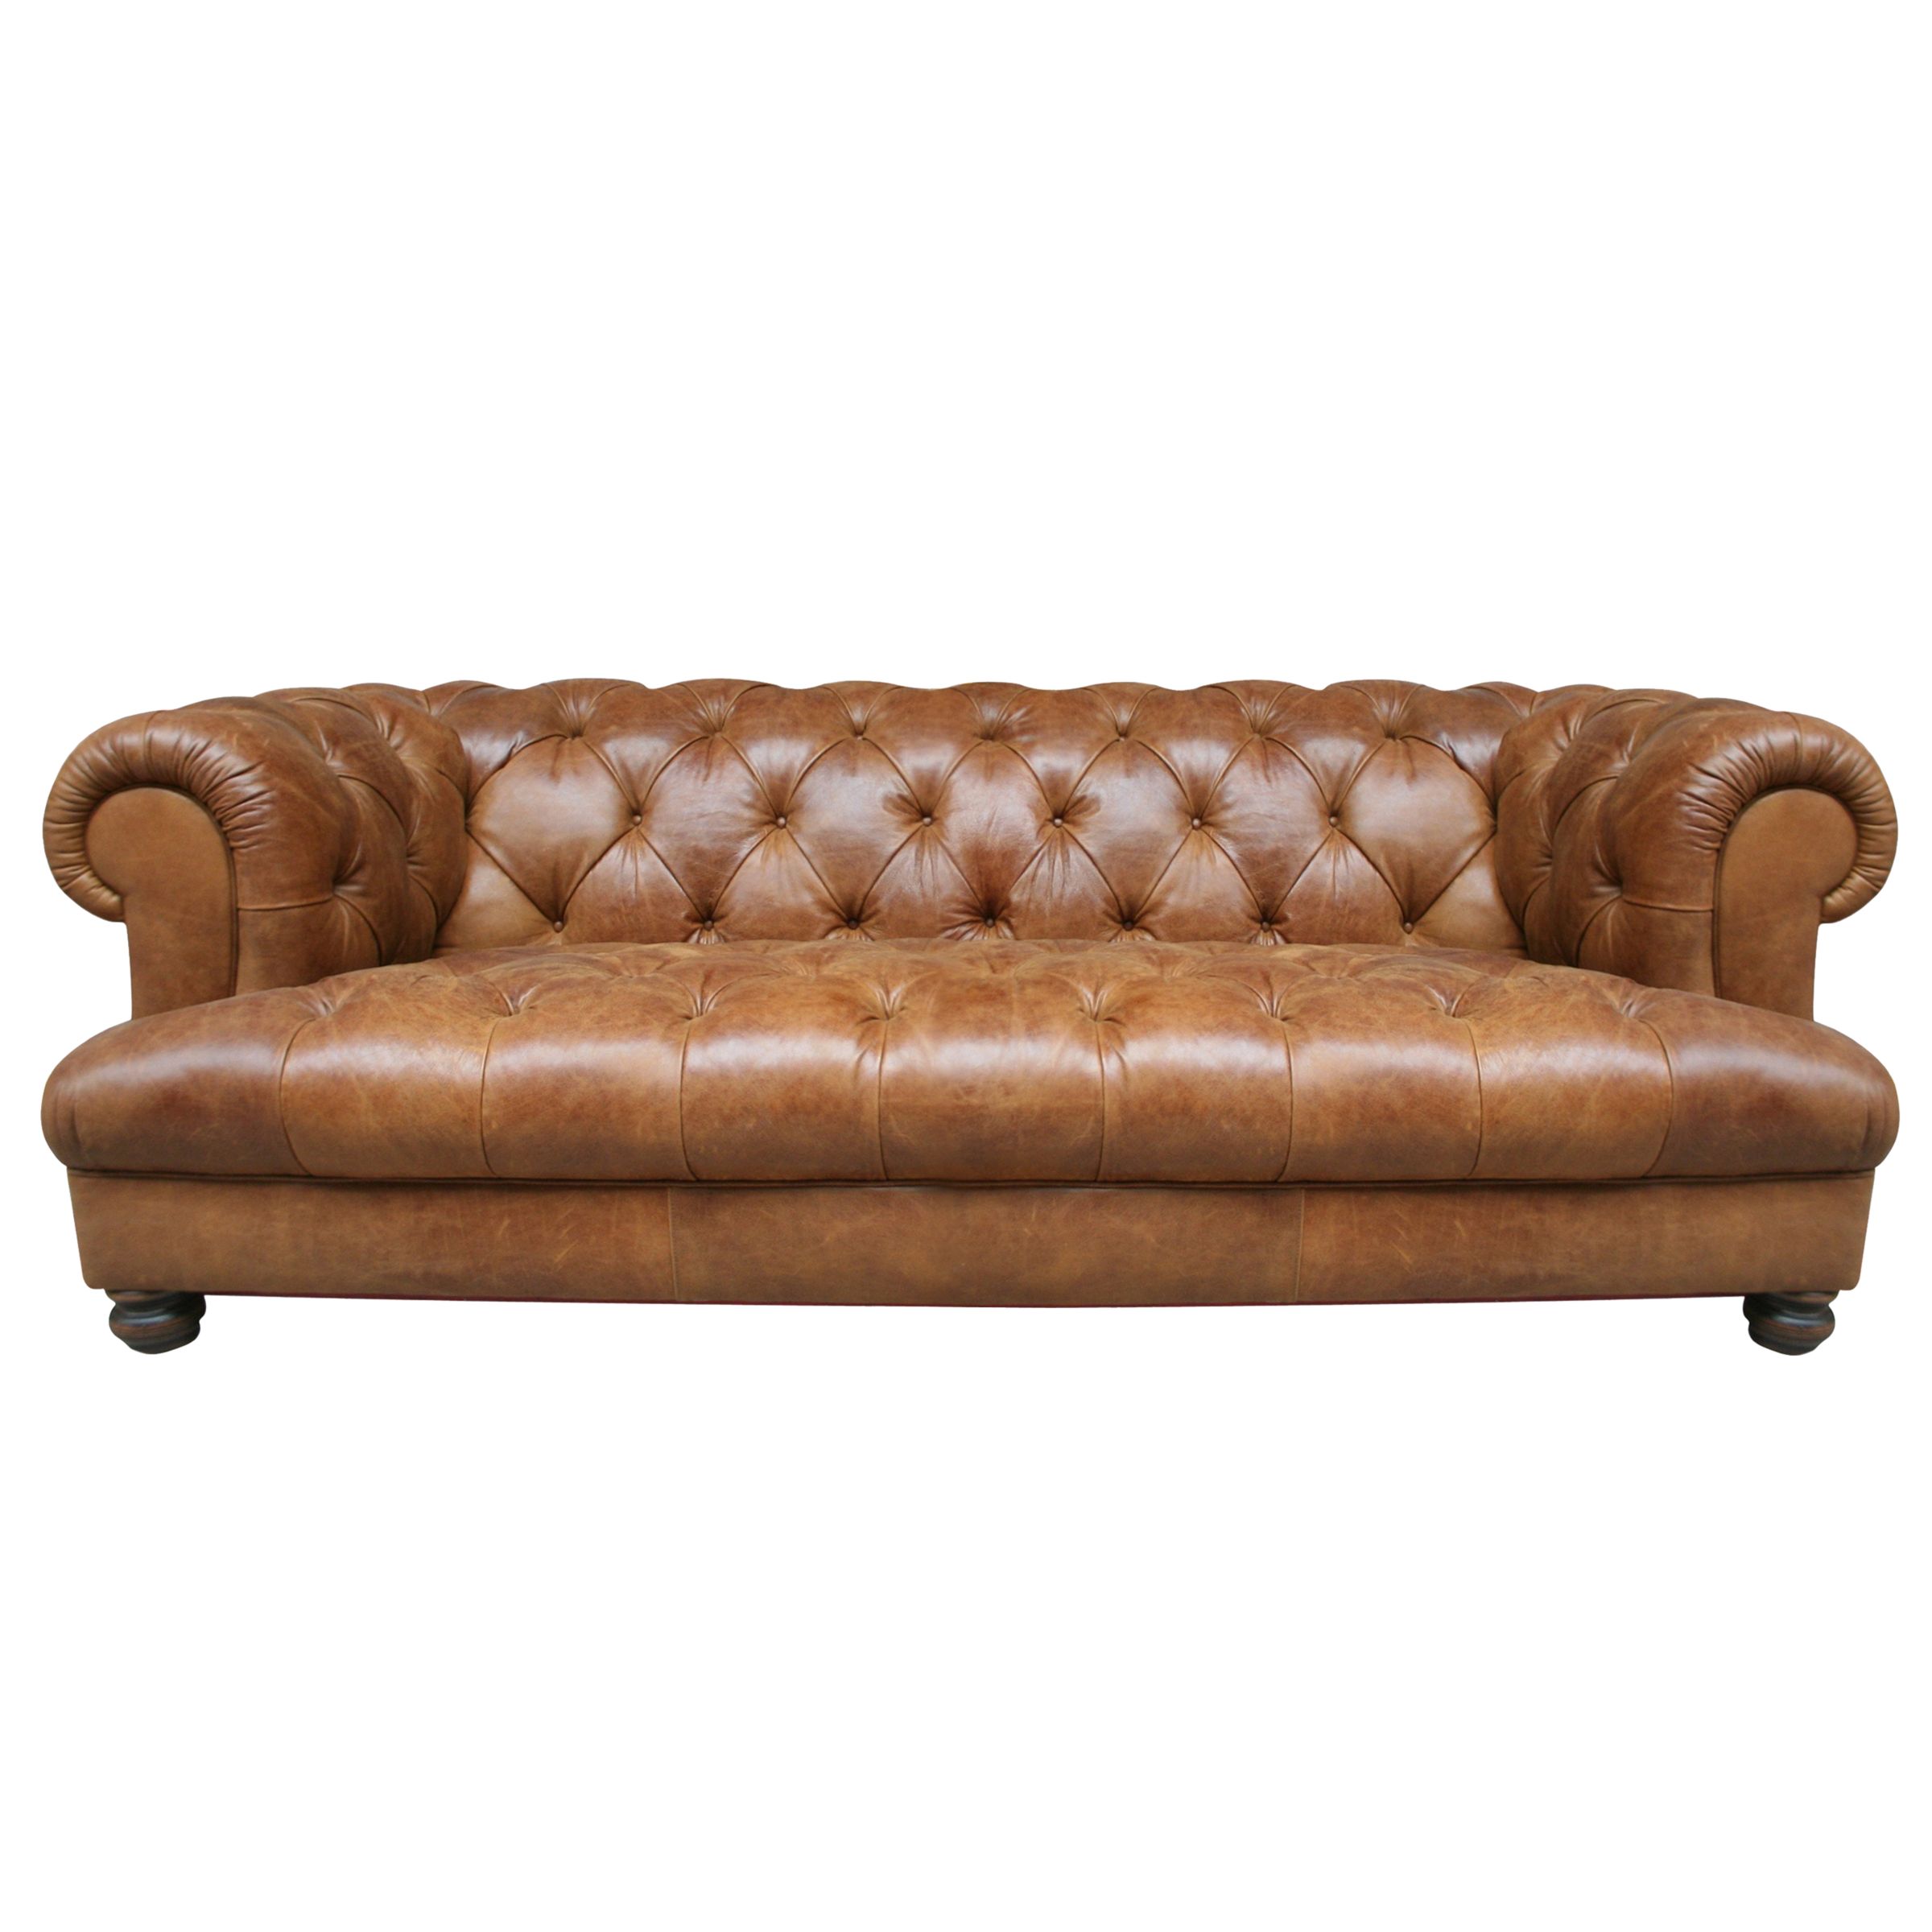 John Lewis Drummond Grand Leather Sofa, Tan